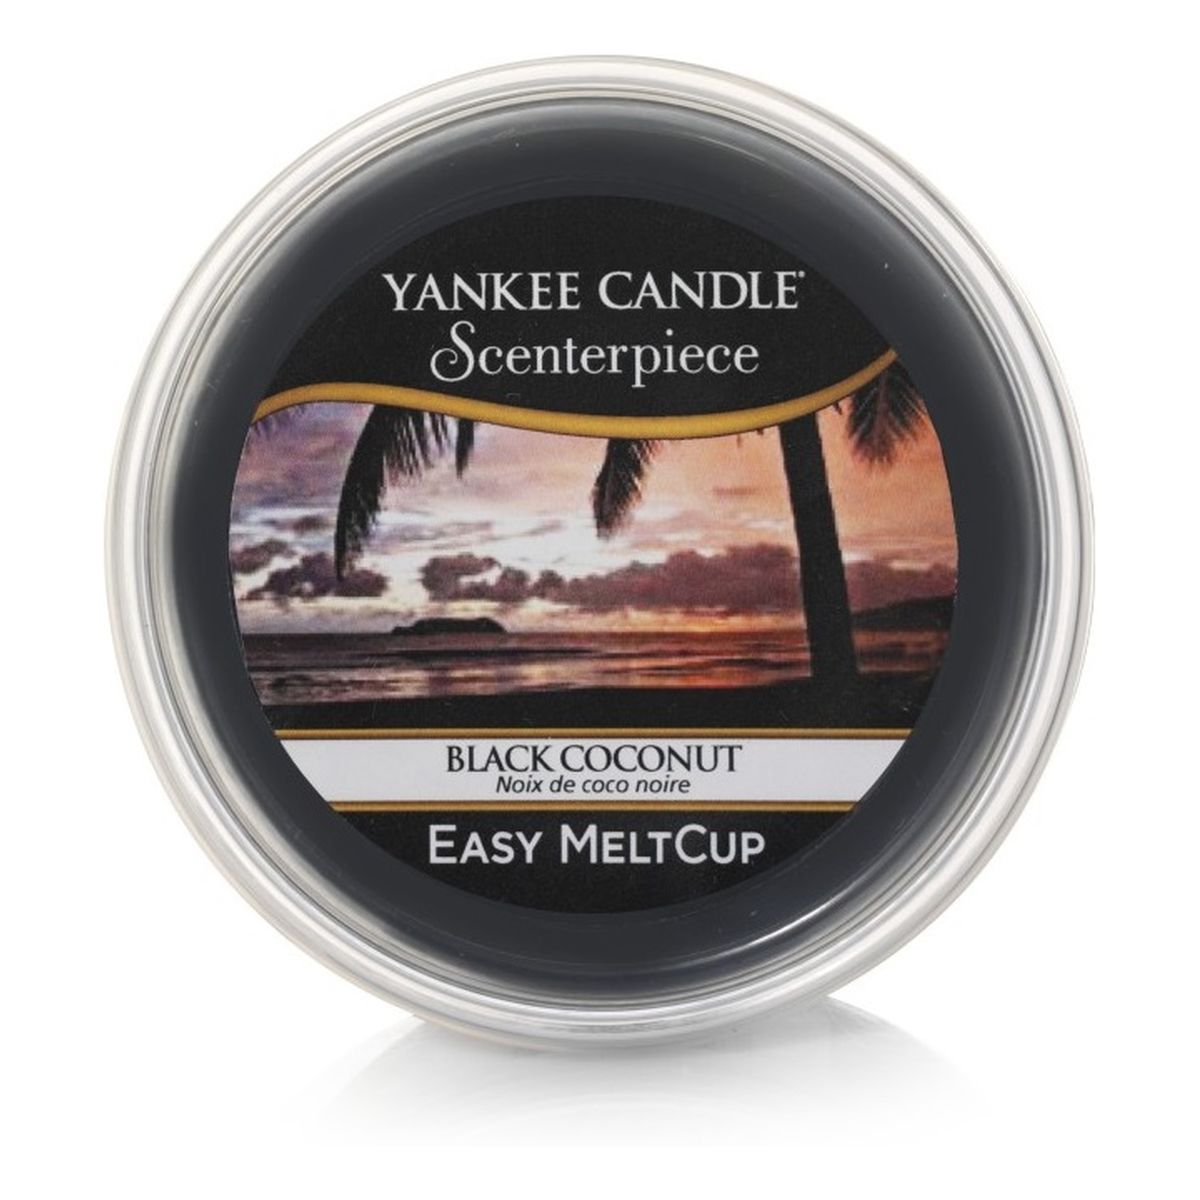 Yankee Candle Scenterpiece Easy Melt Cup wosk do elektrycznego kominka Black Coconut 61g